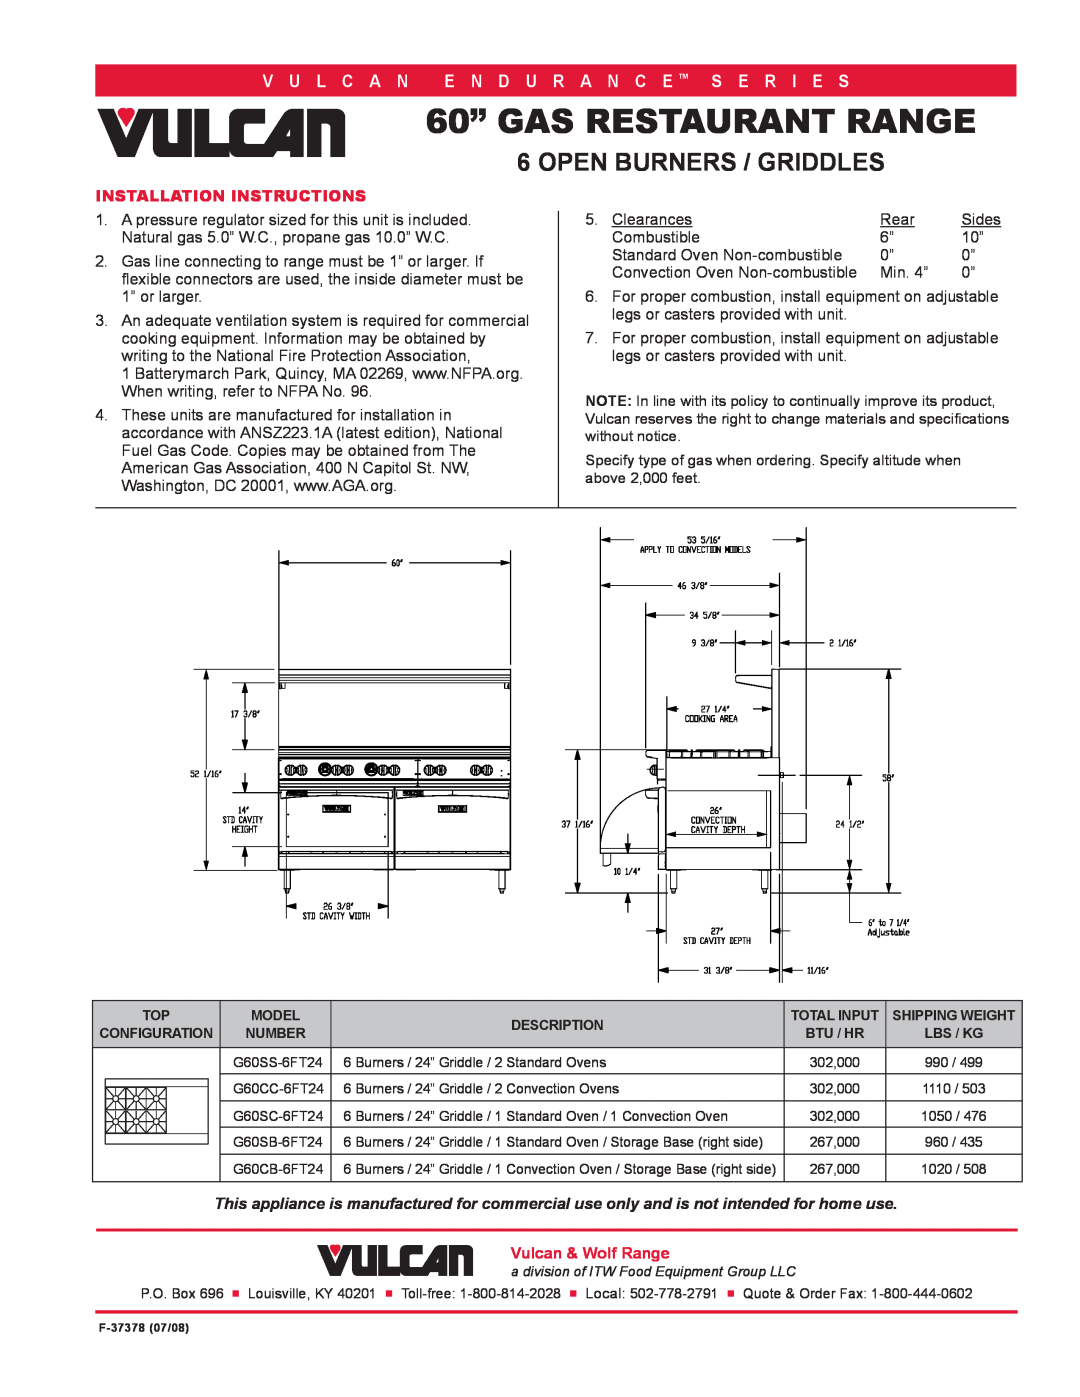 Vulcan-Hart G60SS-6FT24T Installation Instructions, 60” GAS RESTAURANT RANGE, Open Burners / Griddles, V U L C A N 